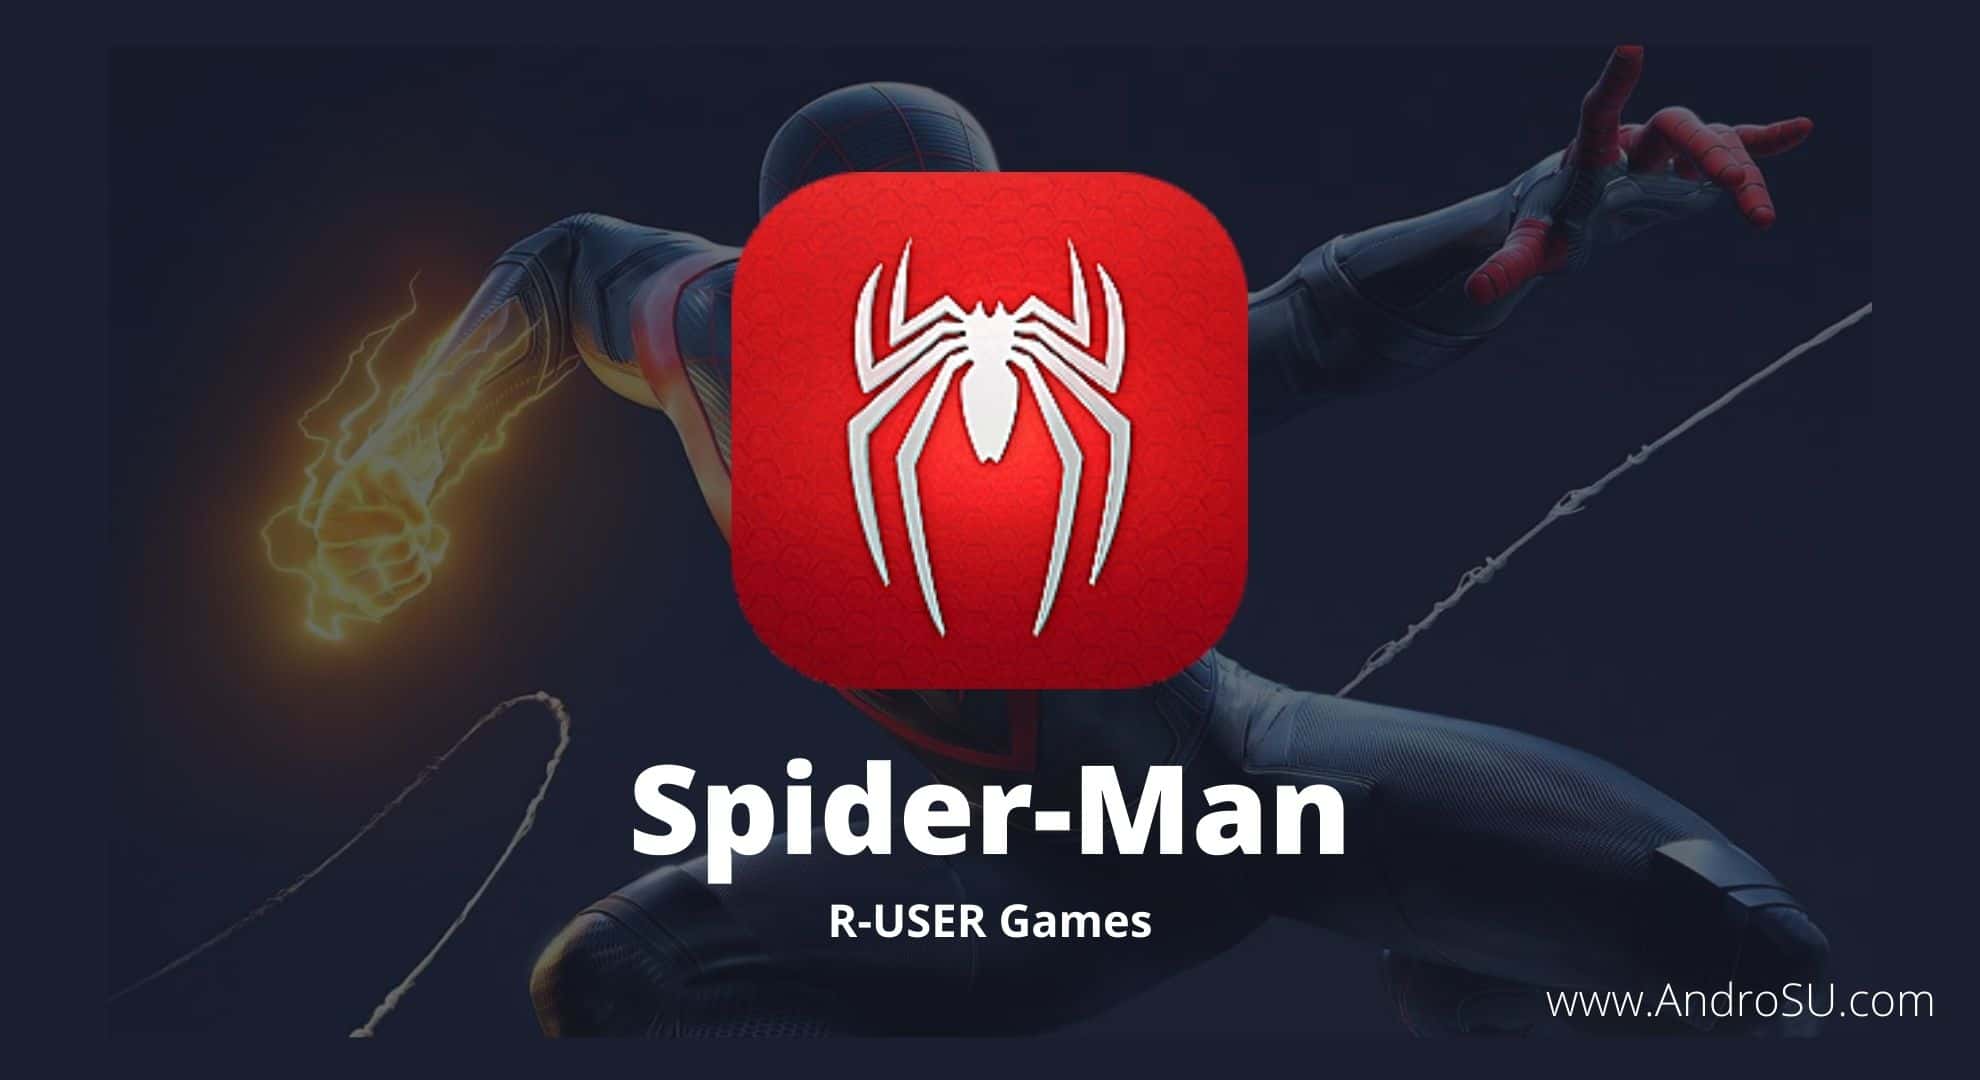 Spiderman Miles Morales APK, Spiderman RUSER Games, Spiderman APK PS4